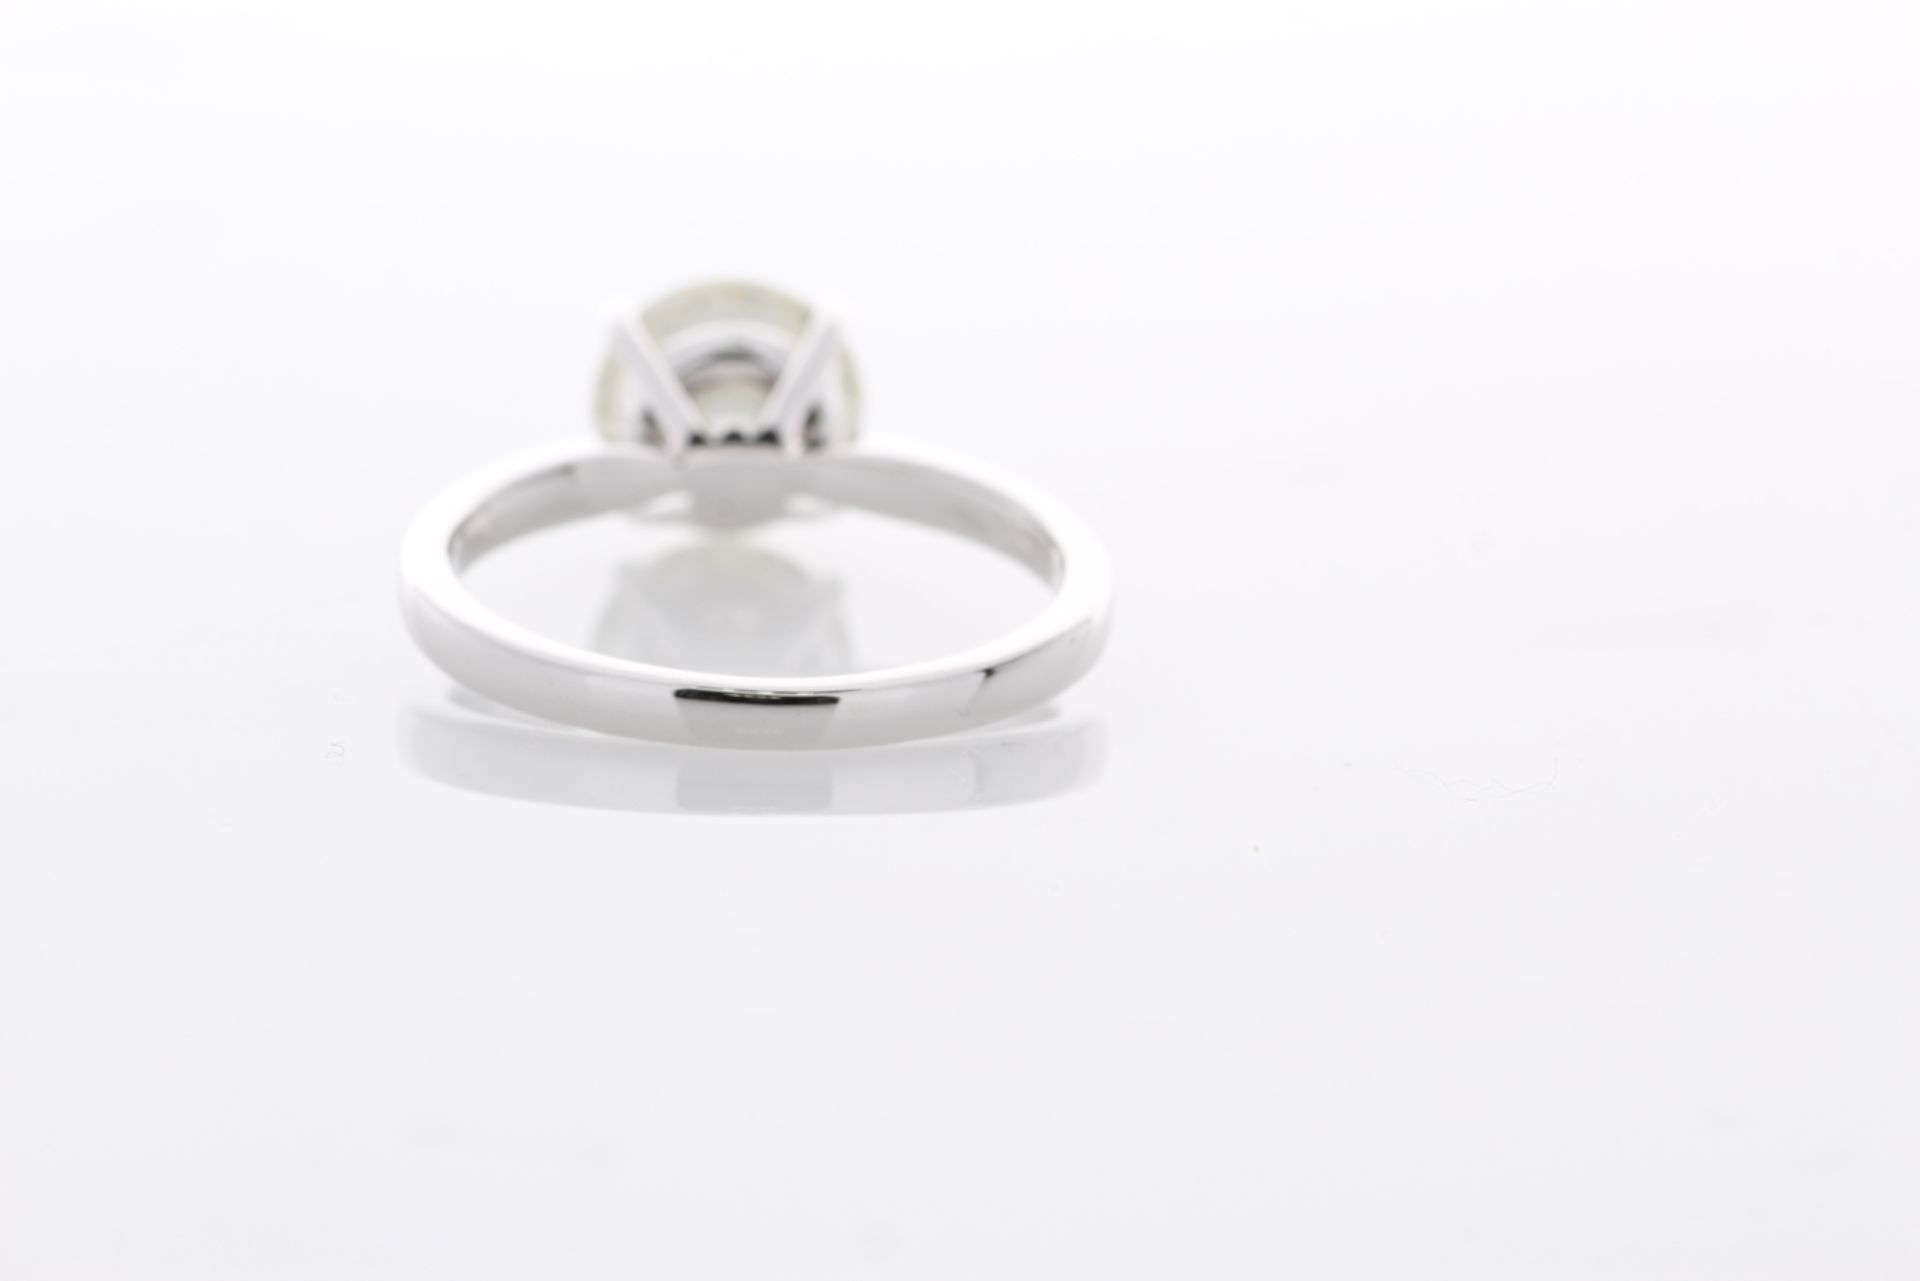 18ct White Gold Single Stone Prong Set Diamond Ring 2.02 Carats - Valued by IDI £45,675.00 - 18ct - Image 3 of 5